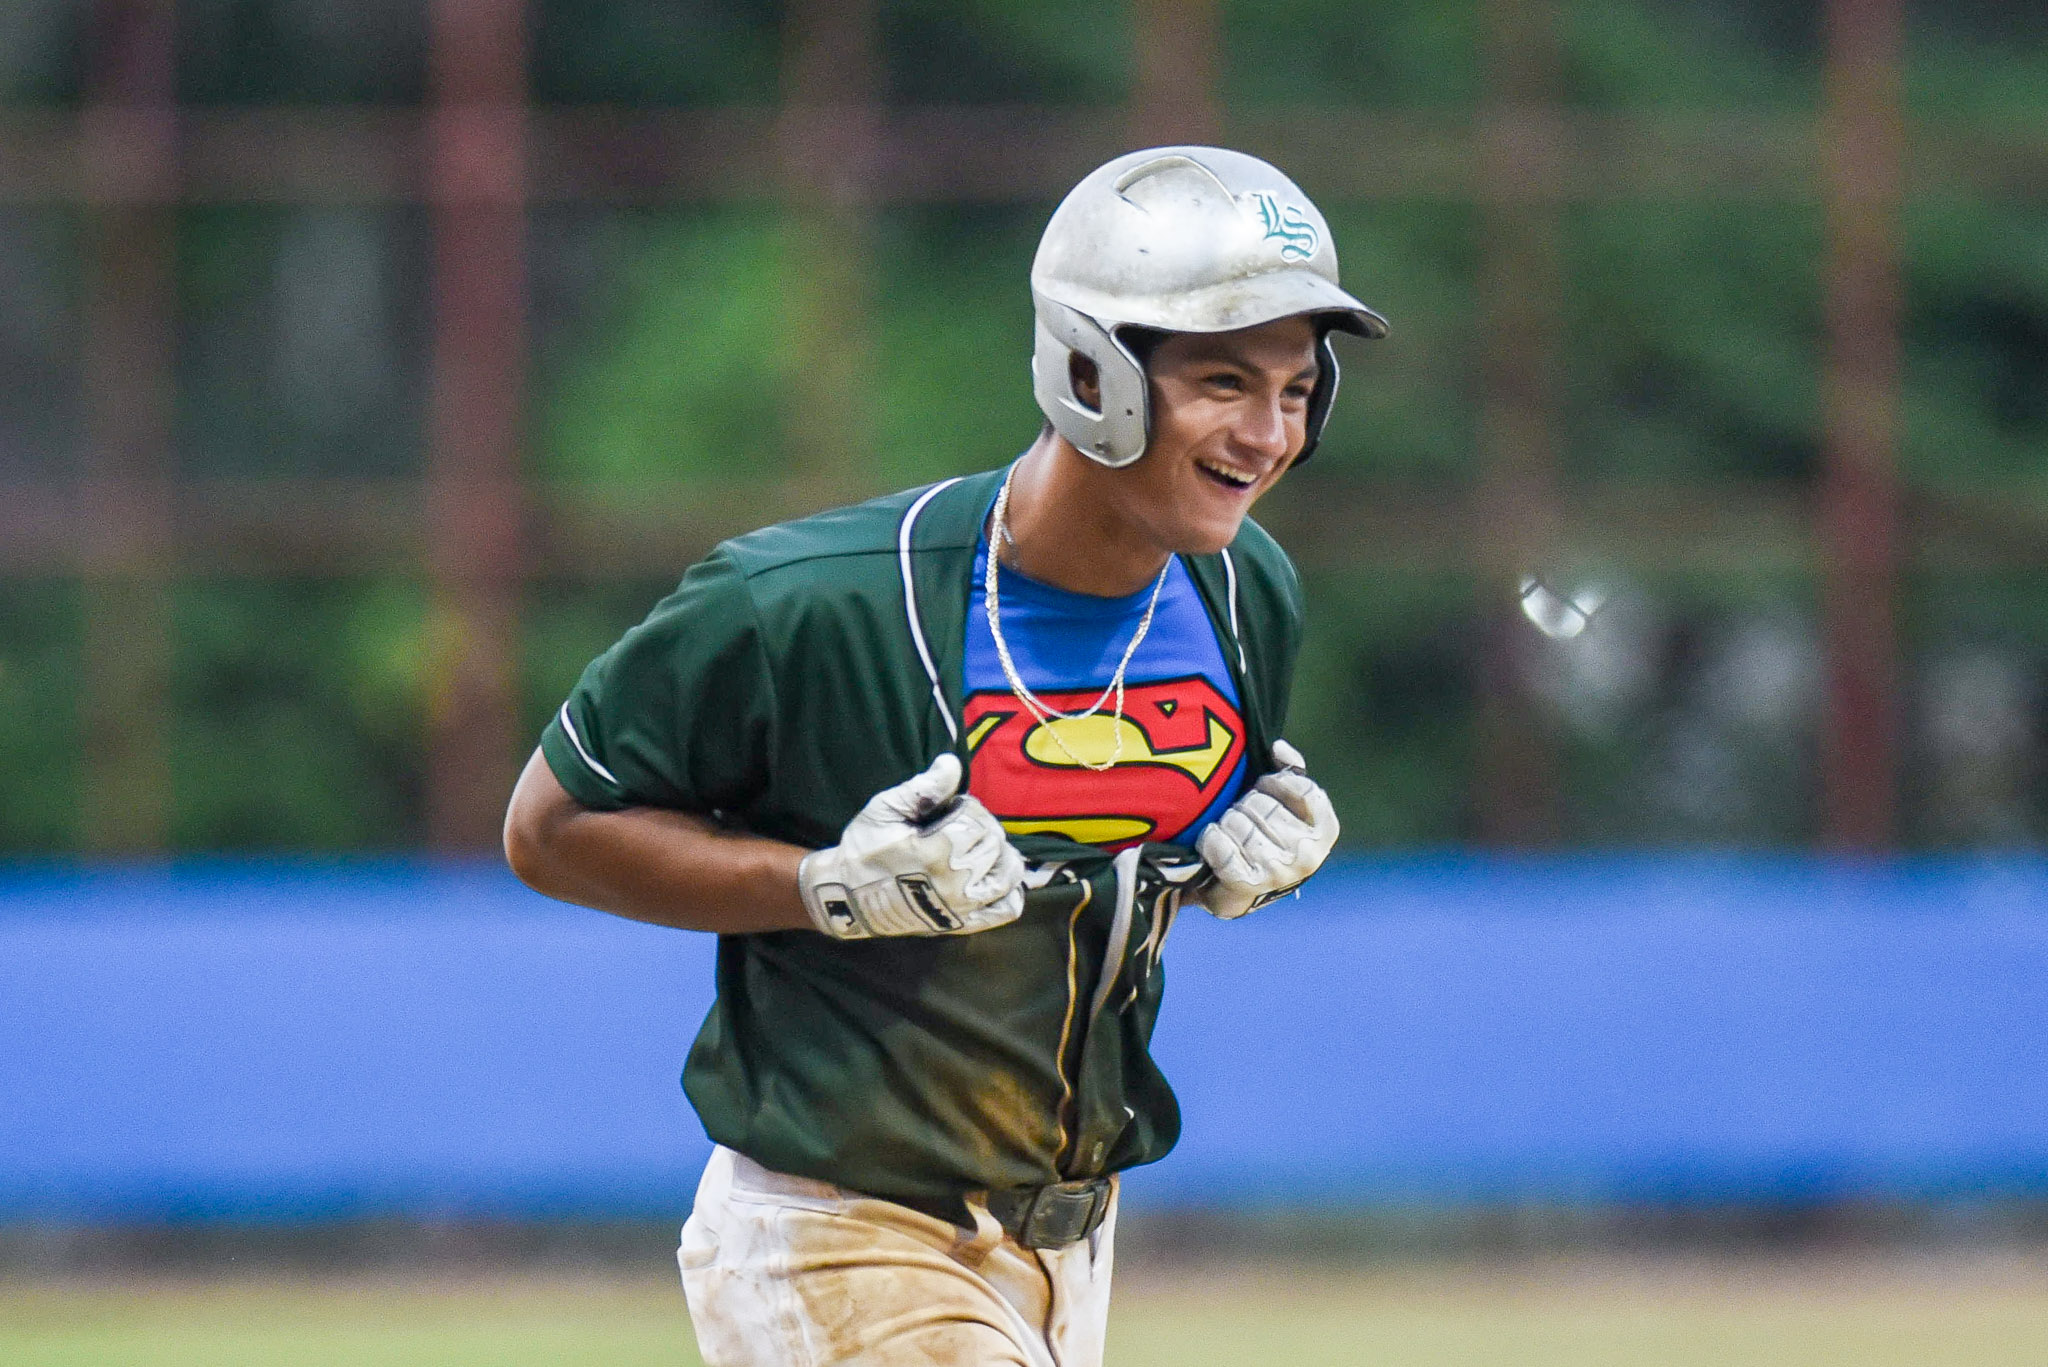 UAAP85-BASEBALL-ESCANO-IGNACIO-9648 Iggy Escano hopes to have left lasting legacy in DLSU Baseball DLSU News UAAP  - philippine sports news